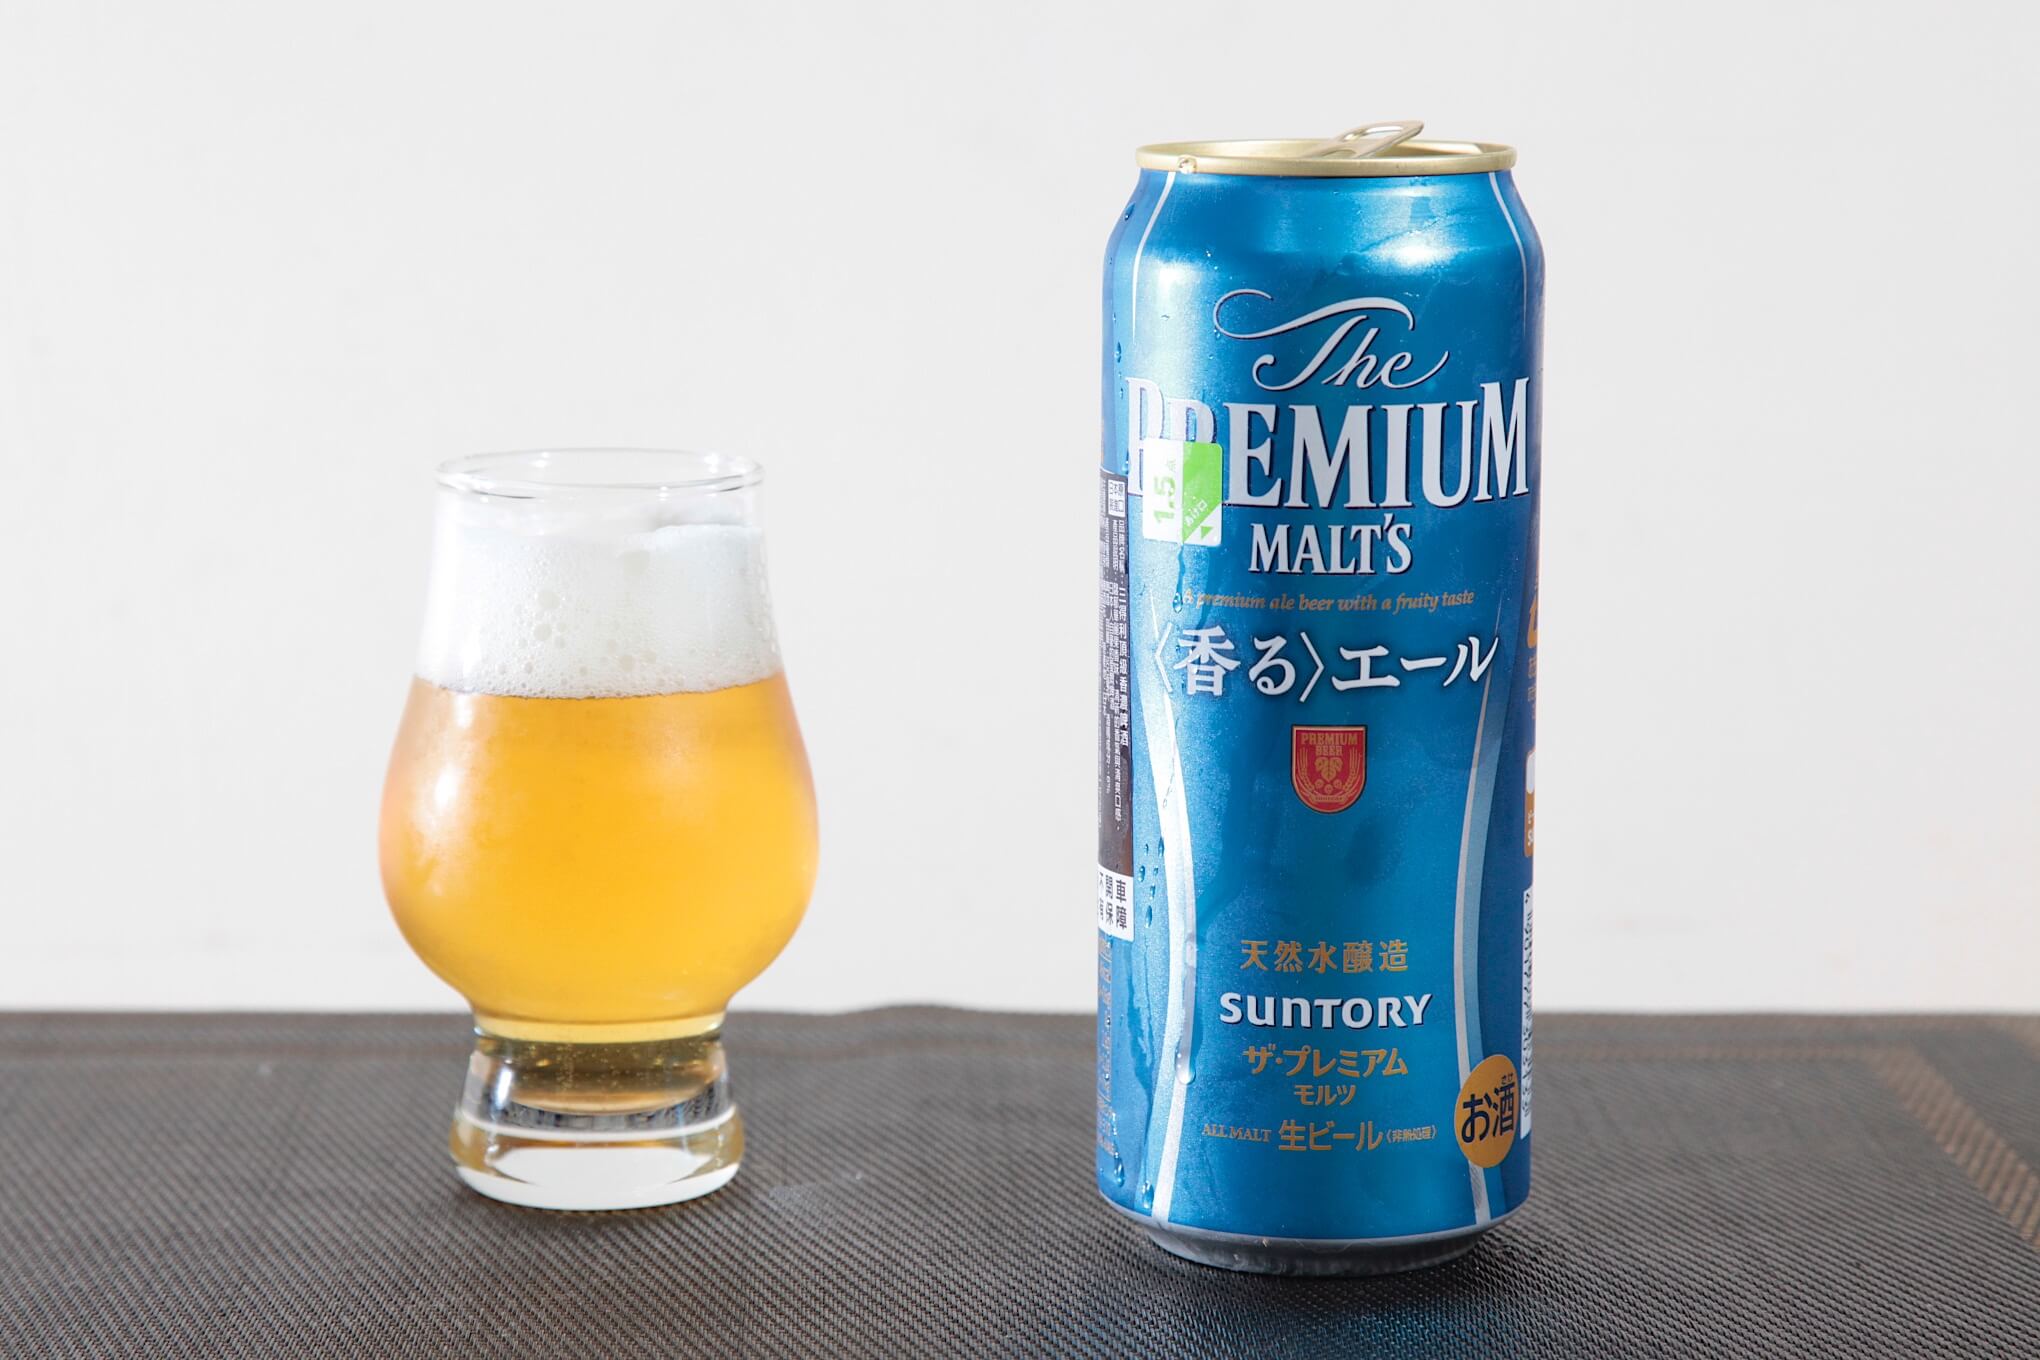 @The PREMIUM MALT’S 三得利頂級香濃啤酒